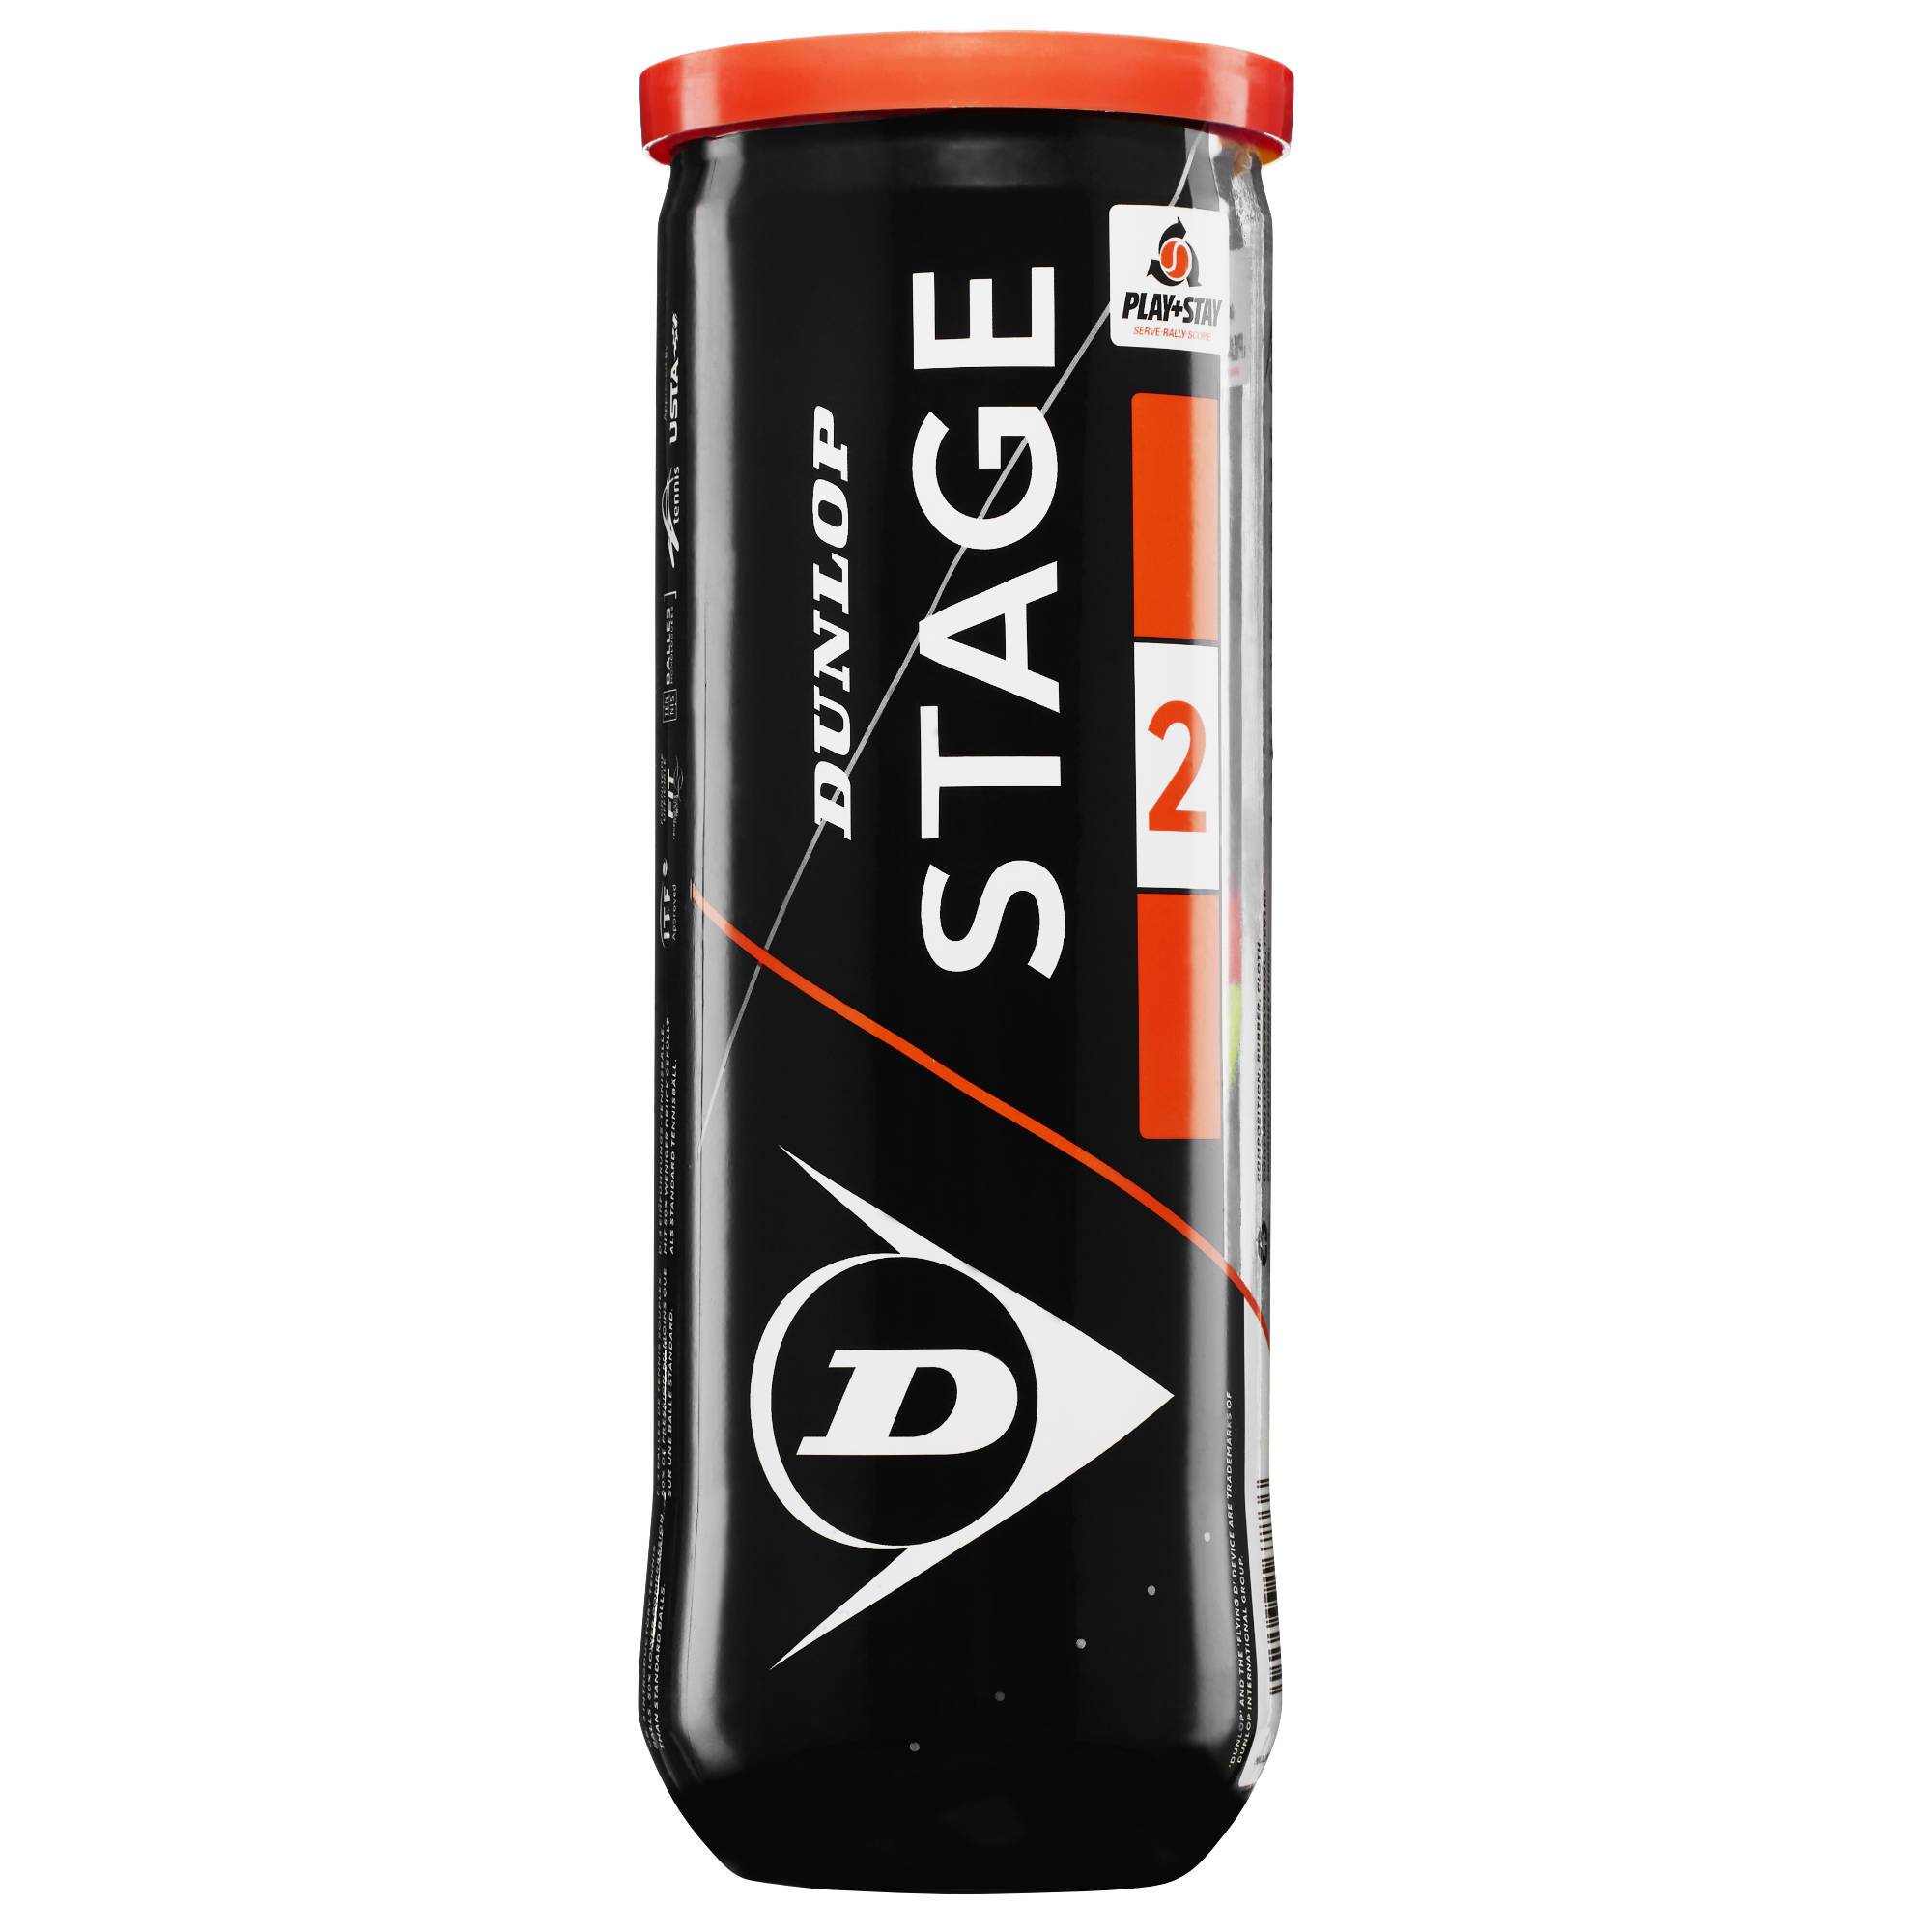 Dunlop Stage 2 Orange Mini Tennis Balls - Tube of 3